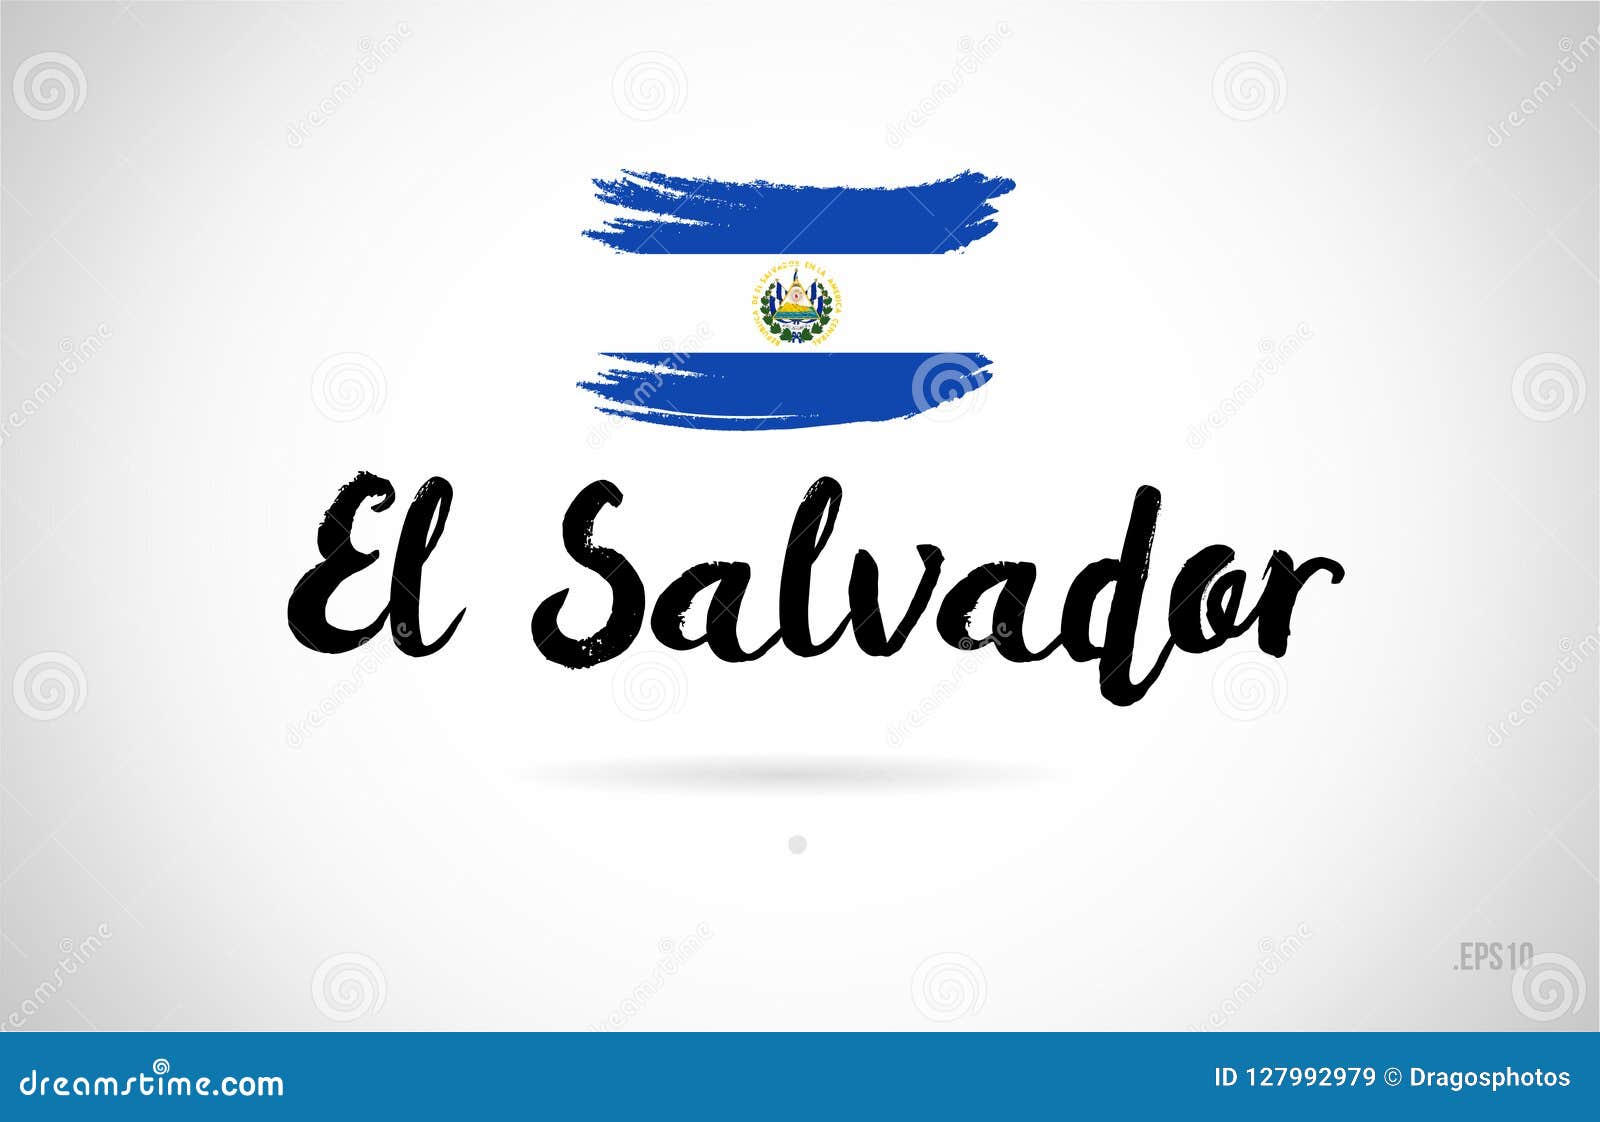 El Salvador Country Flag Concept with Grunge Design Icon Logo Stock Vector  - Illustration of icon, logo: 127992979